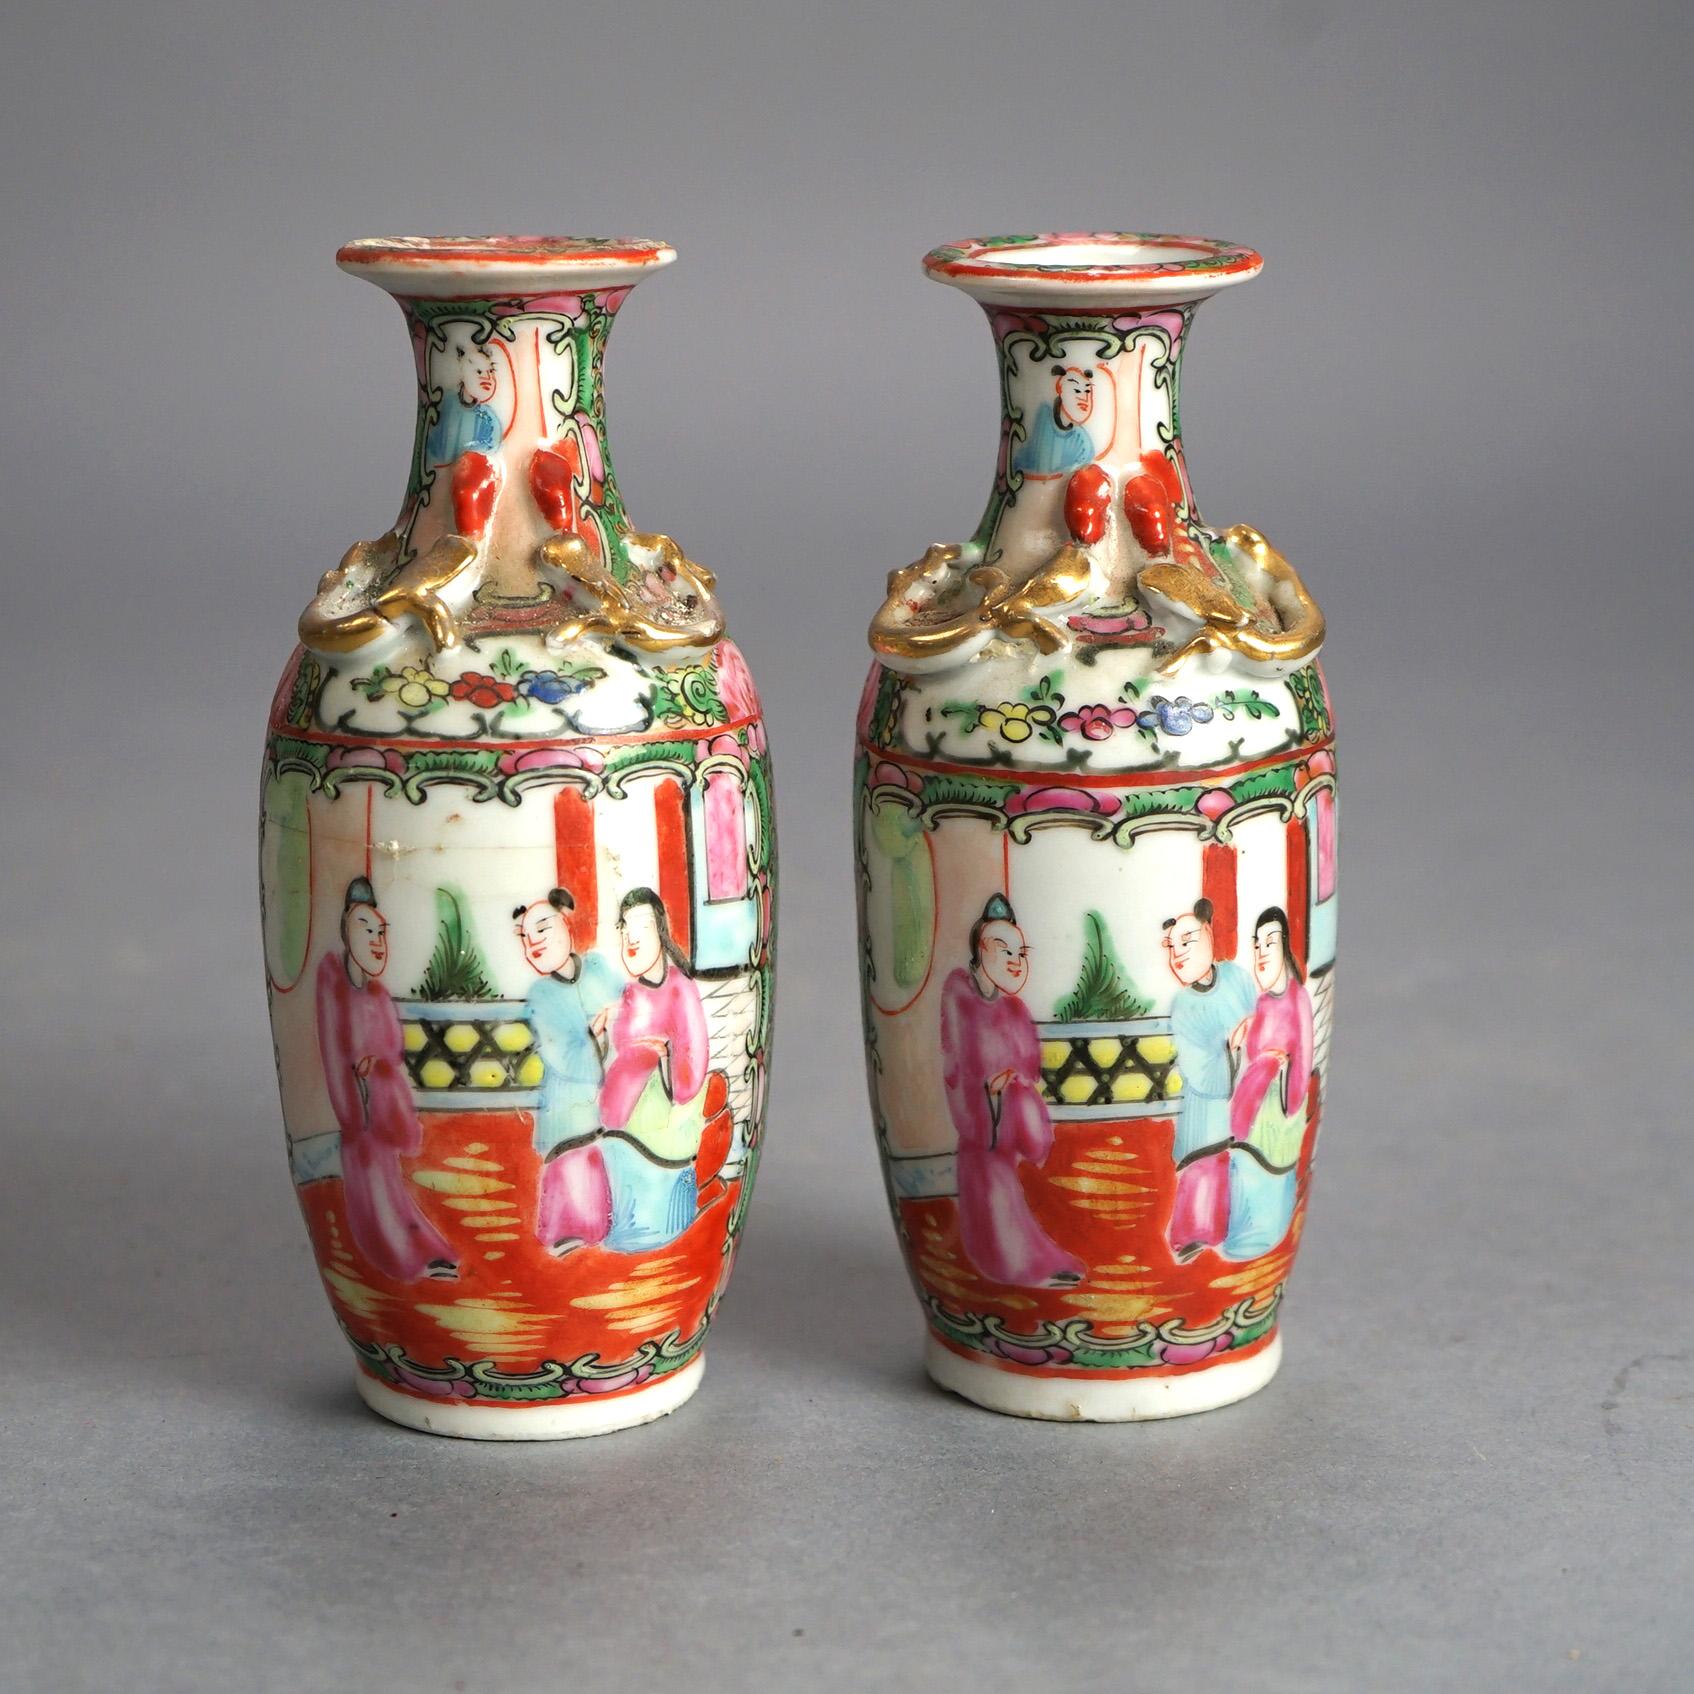 Gilt Antique Chinese Rose Medallion Porcelain Vases with Gardens & Figures C1900 For Sale